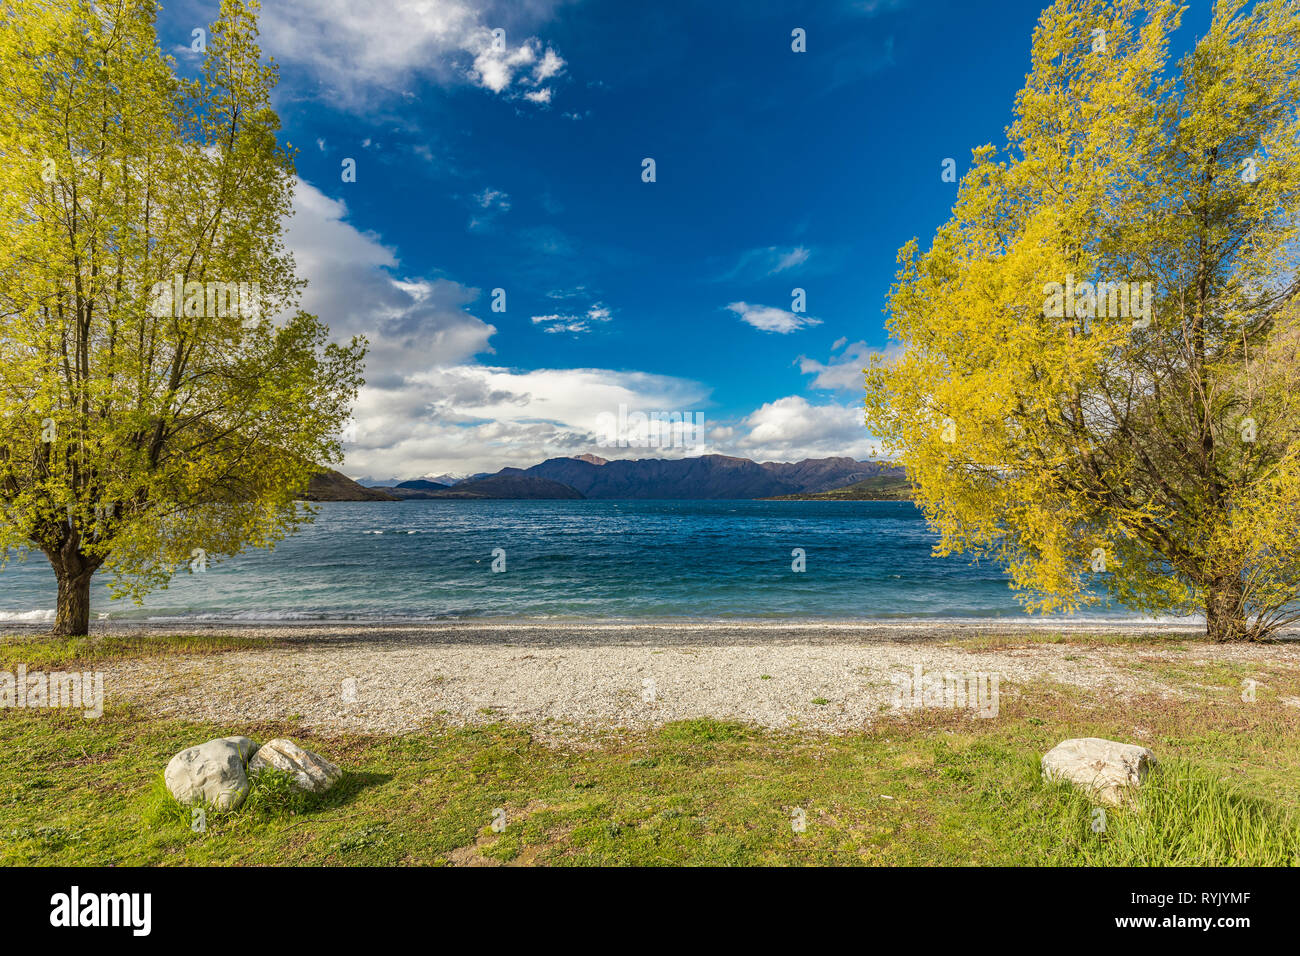 New Zealand landscape, Lake Wanaka, Glendhu Bay - lake and trees Stock Photo